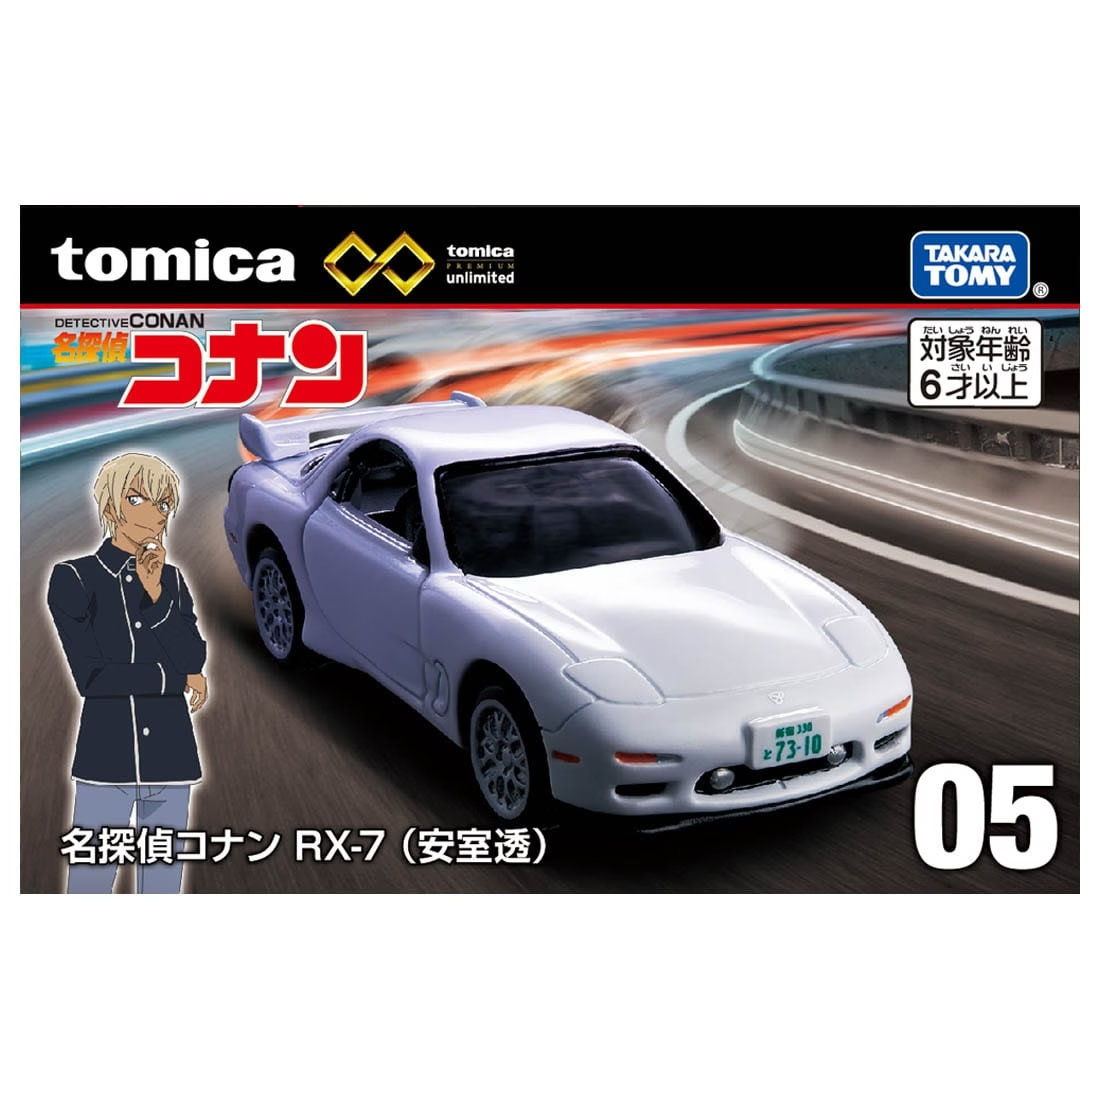 Tomica Premium Unlimited No.05 Detective Conan RX-7